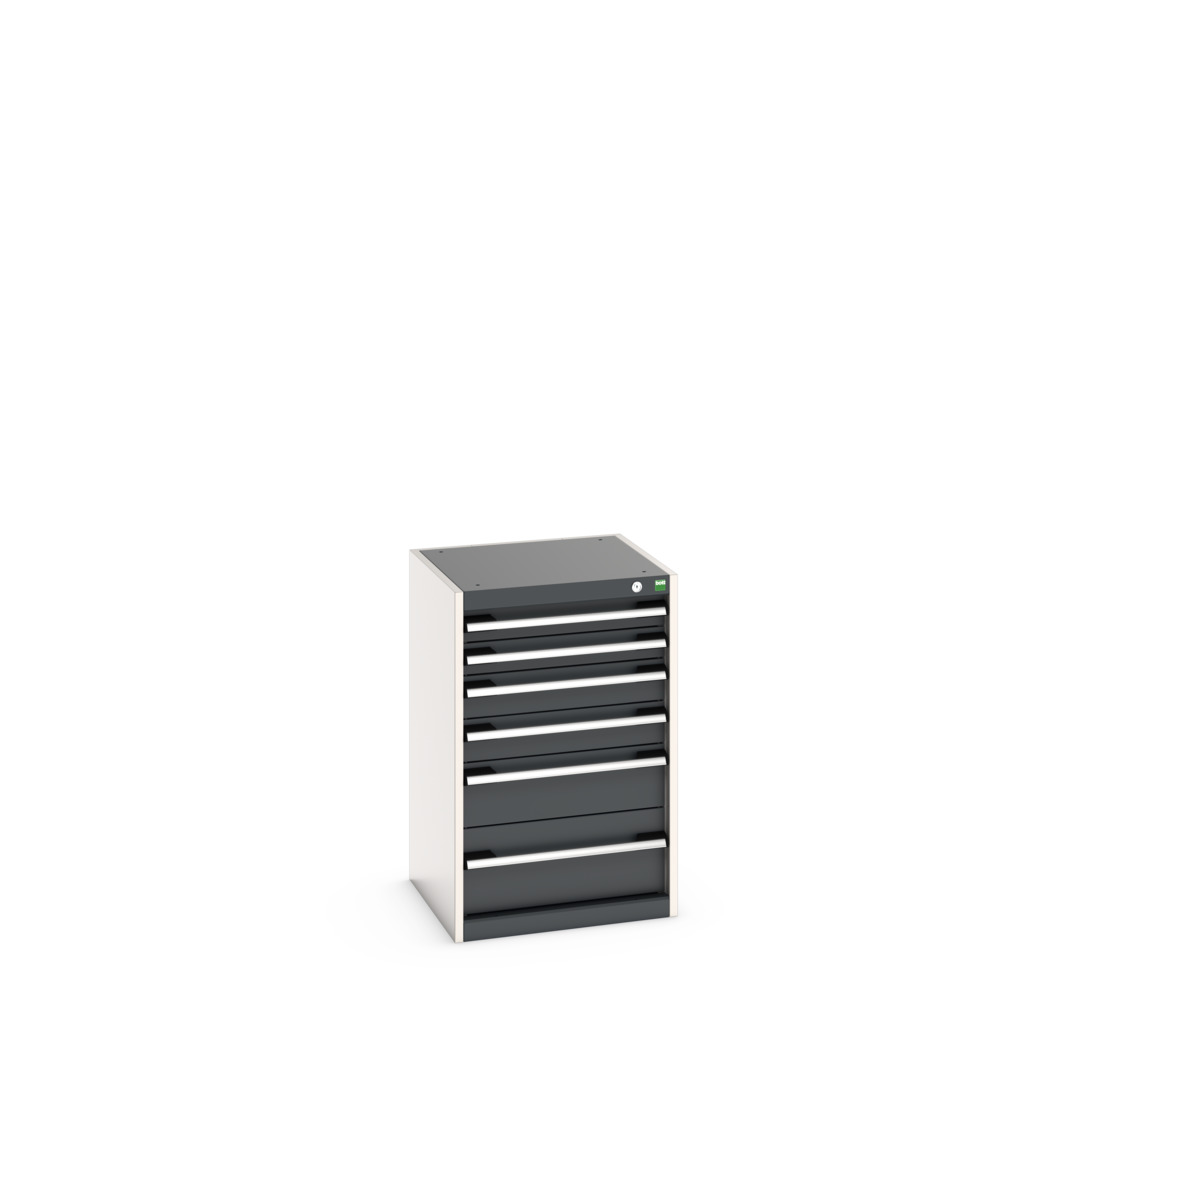 40010117. - cubio drawer cabinet